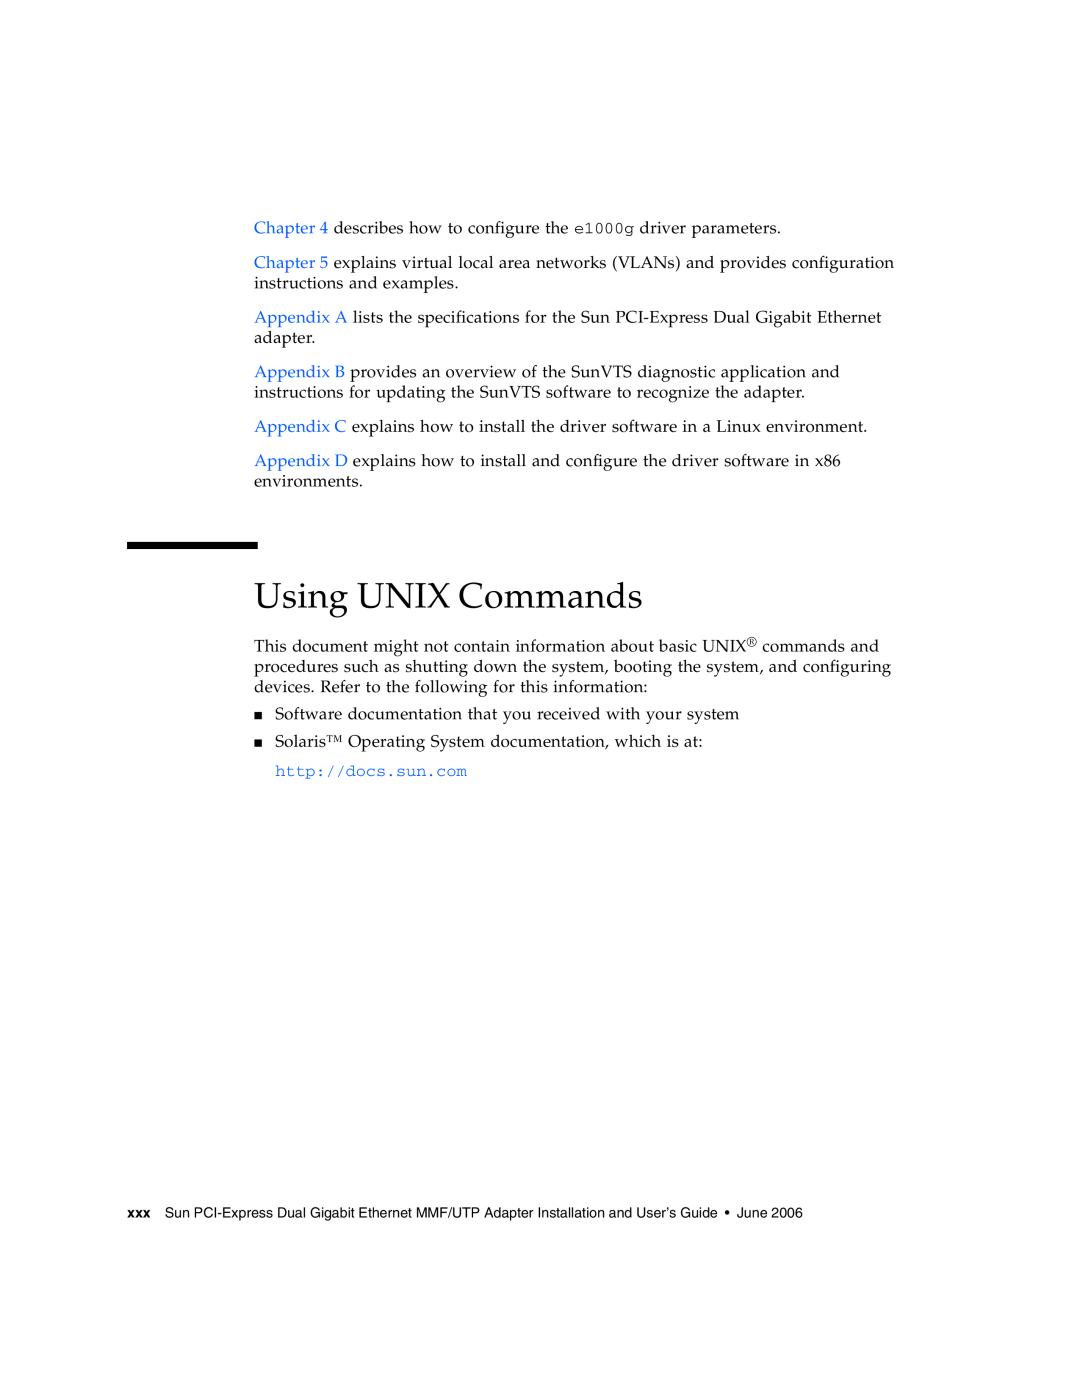 Sun Microsystems Gigabit Ethernet MMF/UTP Adapter manual Using UNIX Commands 